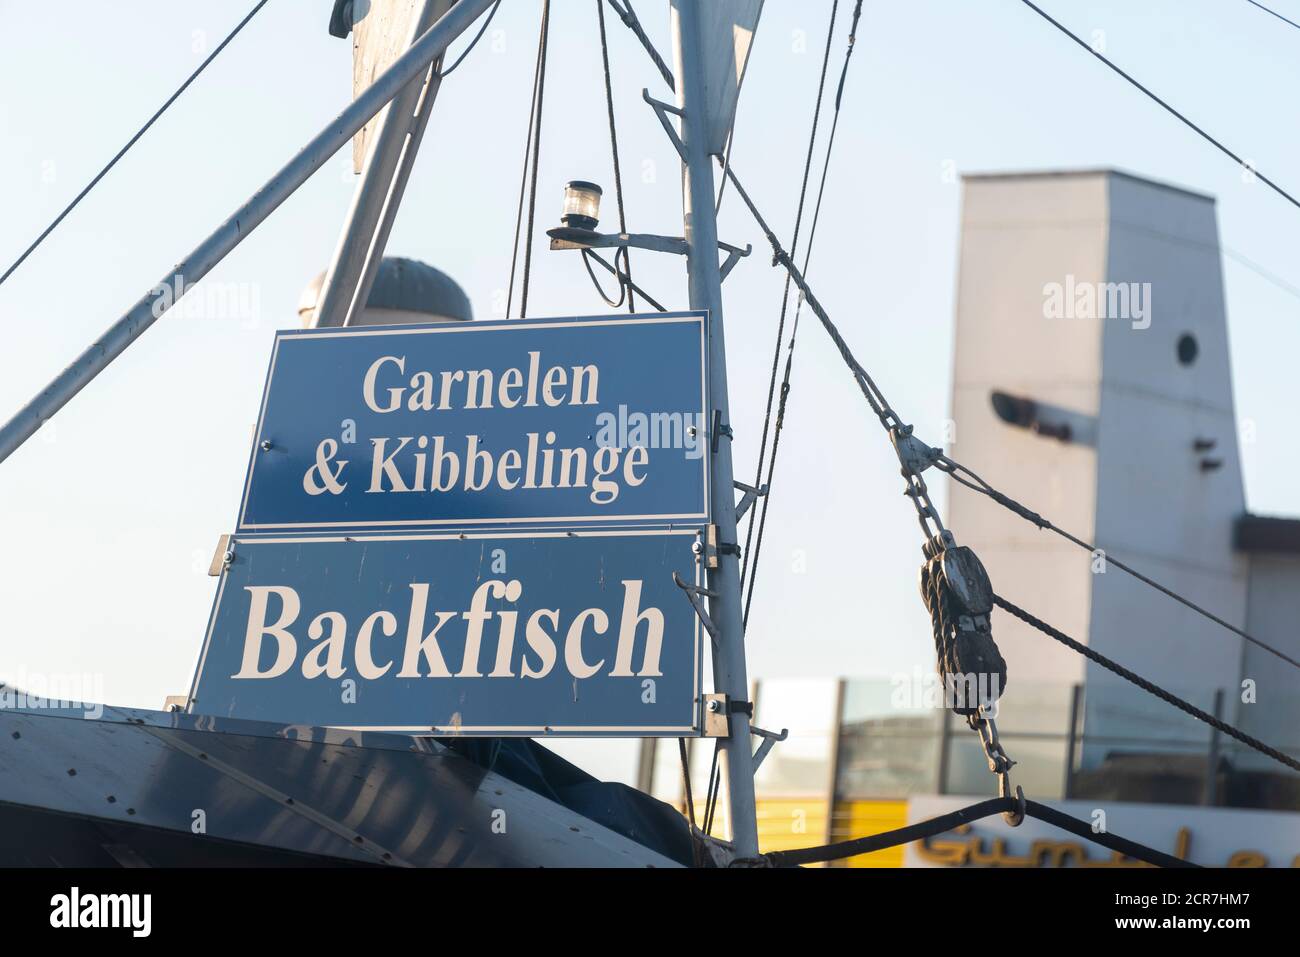 Germania, Meclemburgo-Pomerania occidentale, Sassnitz, casa tagliapesca, cartellone, backfisch, gamberetti, Kibbelinge, isola di Rügen, Mar Baltico Foto Stock